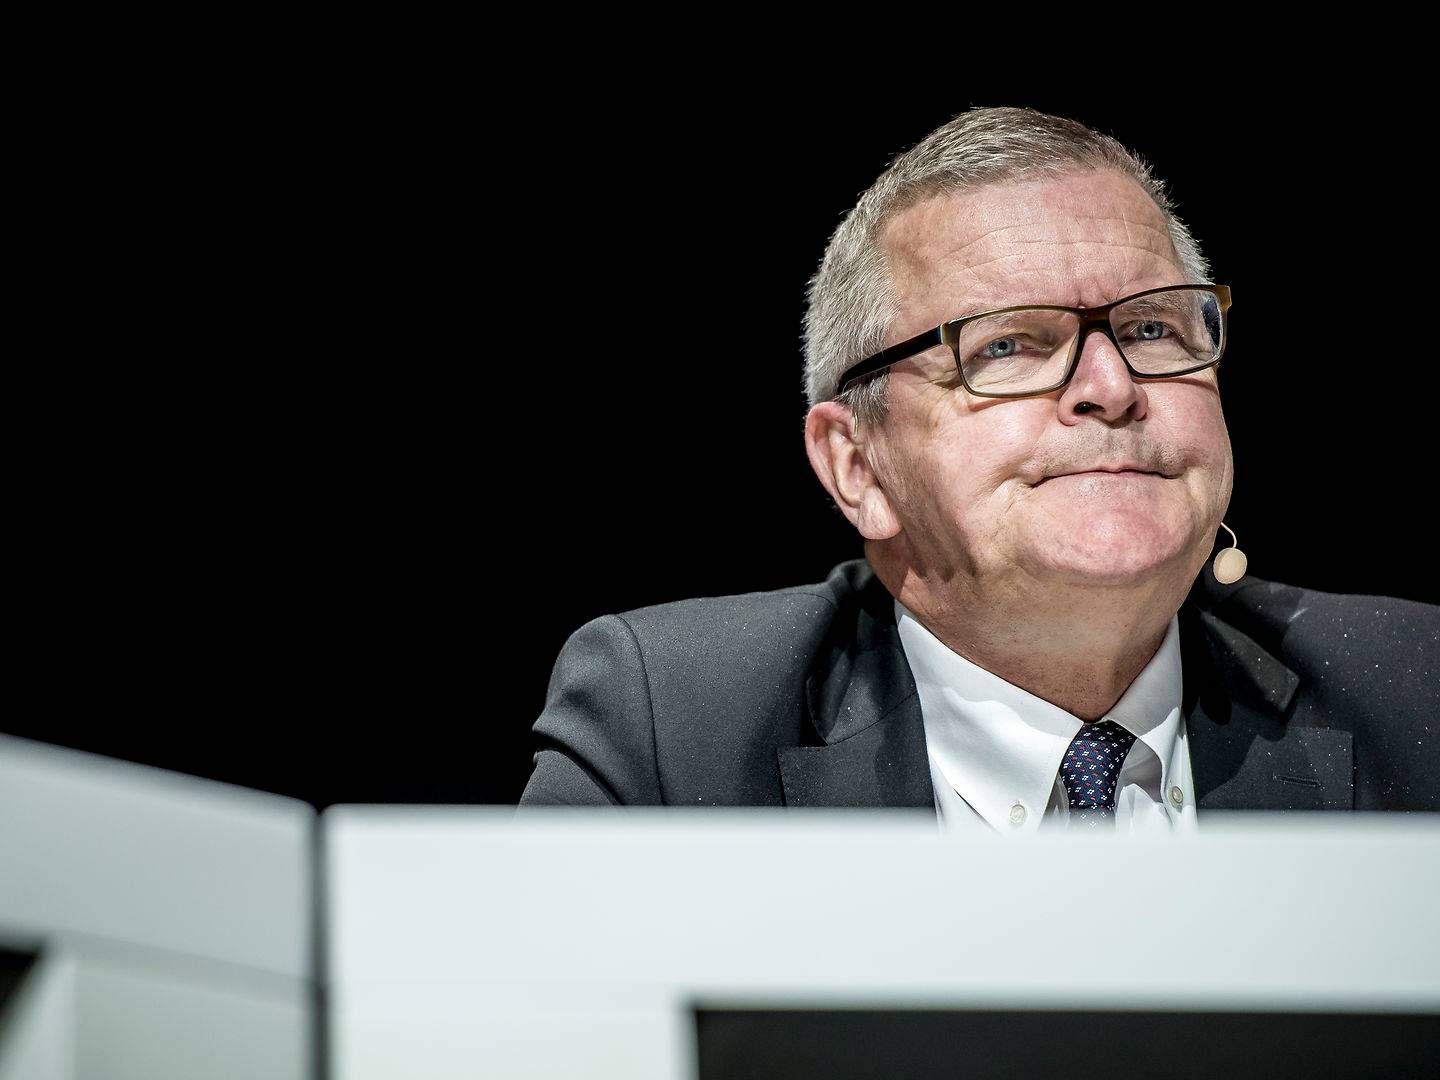 Det Systemiske Risikoråd med nationalbankdirektør Lars Rohde i spidsen. | Foto: Mads Claus Rasmussen/Ritzau Scanpix